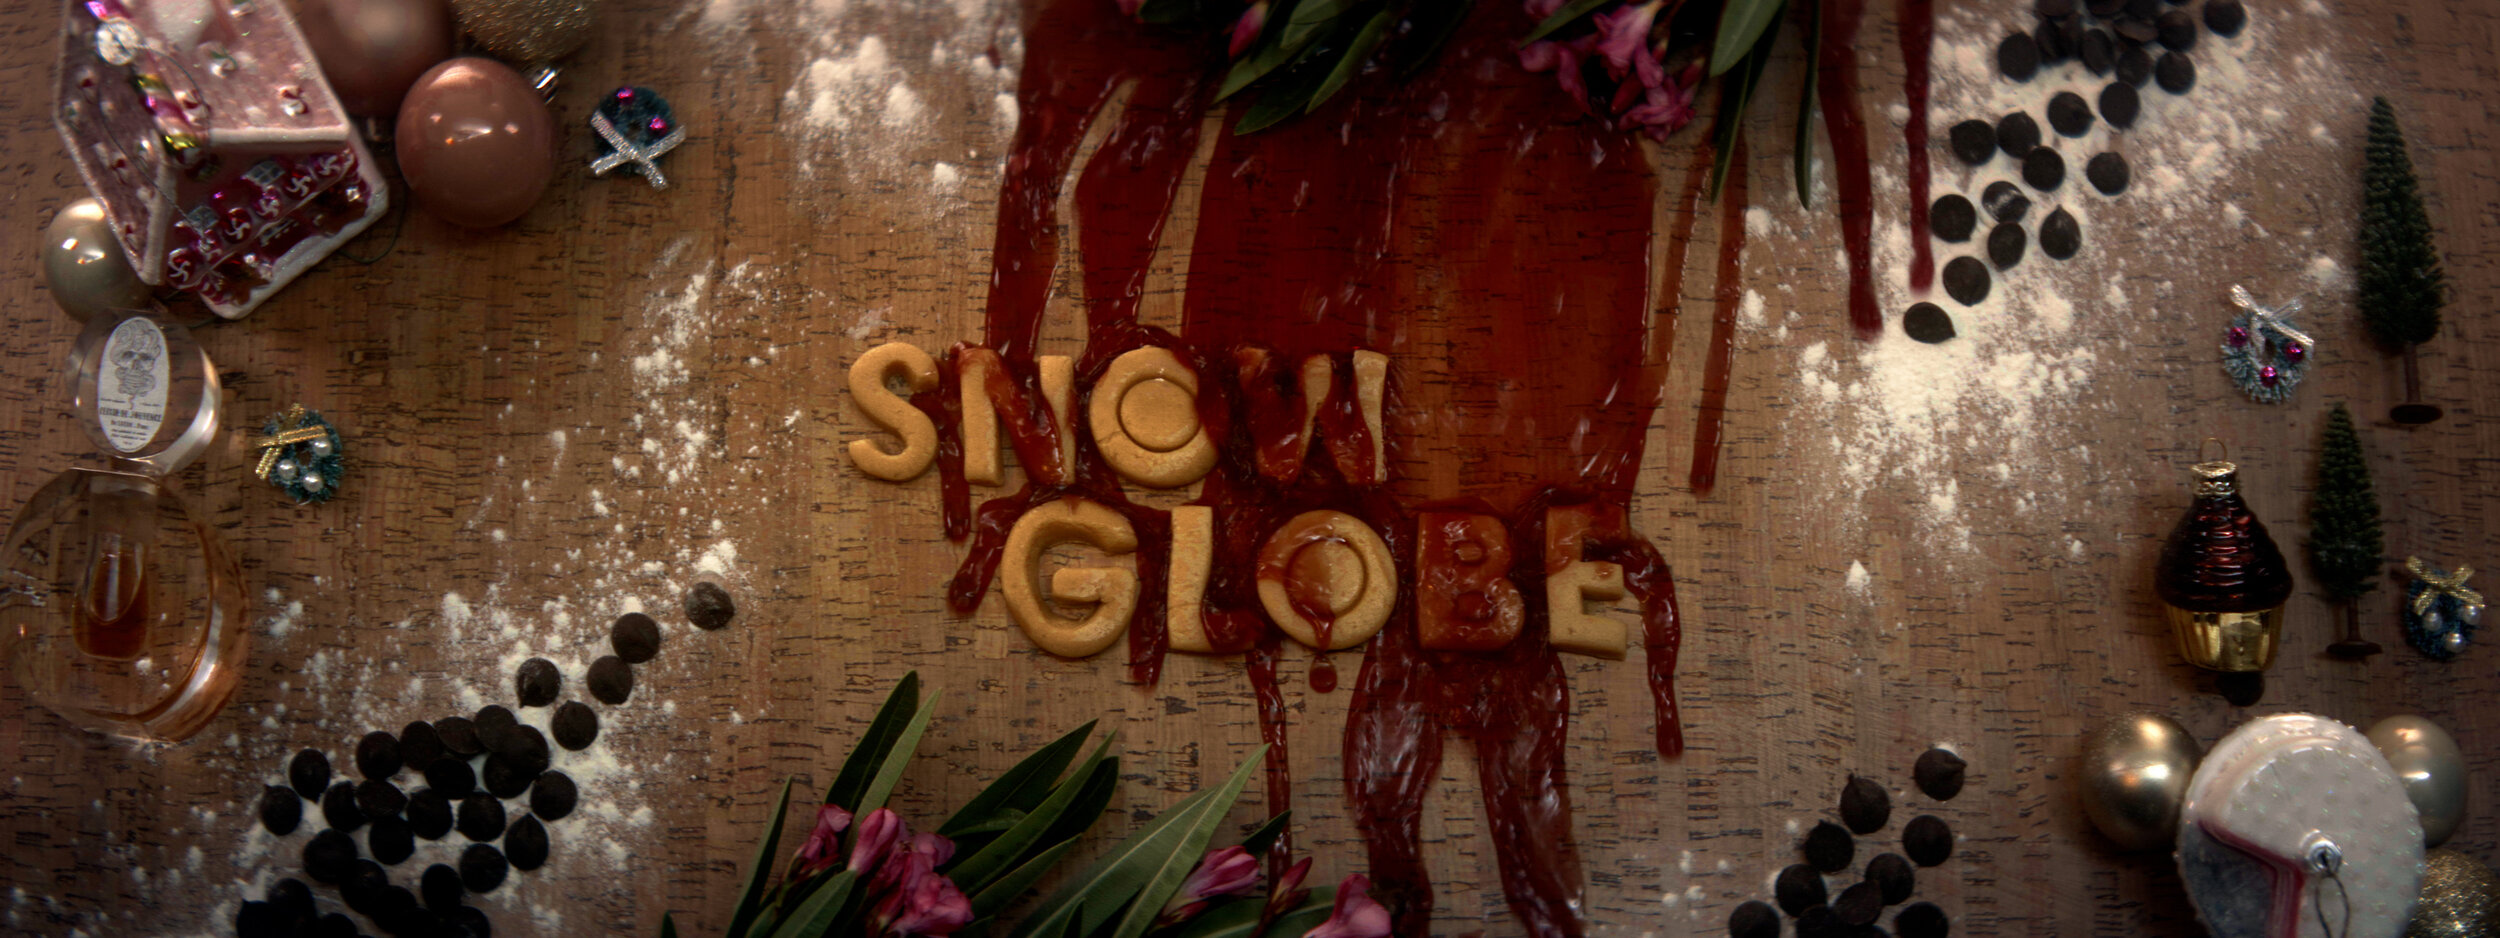 Snow Globe_Movie Stills_002.jpg